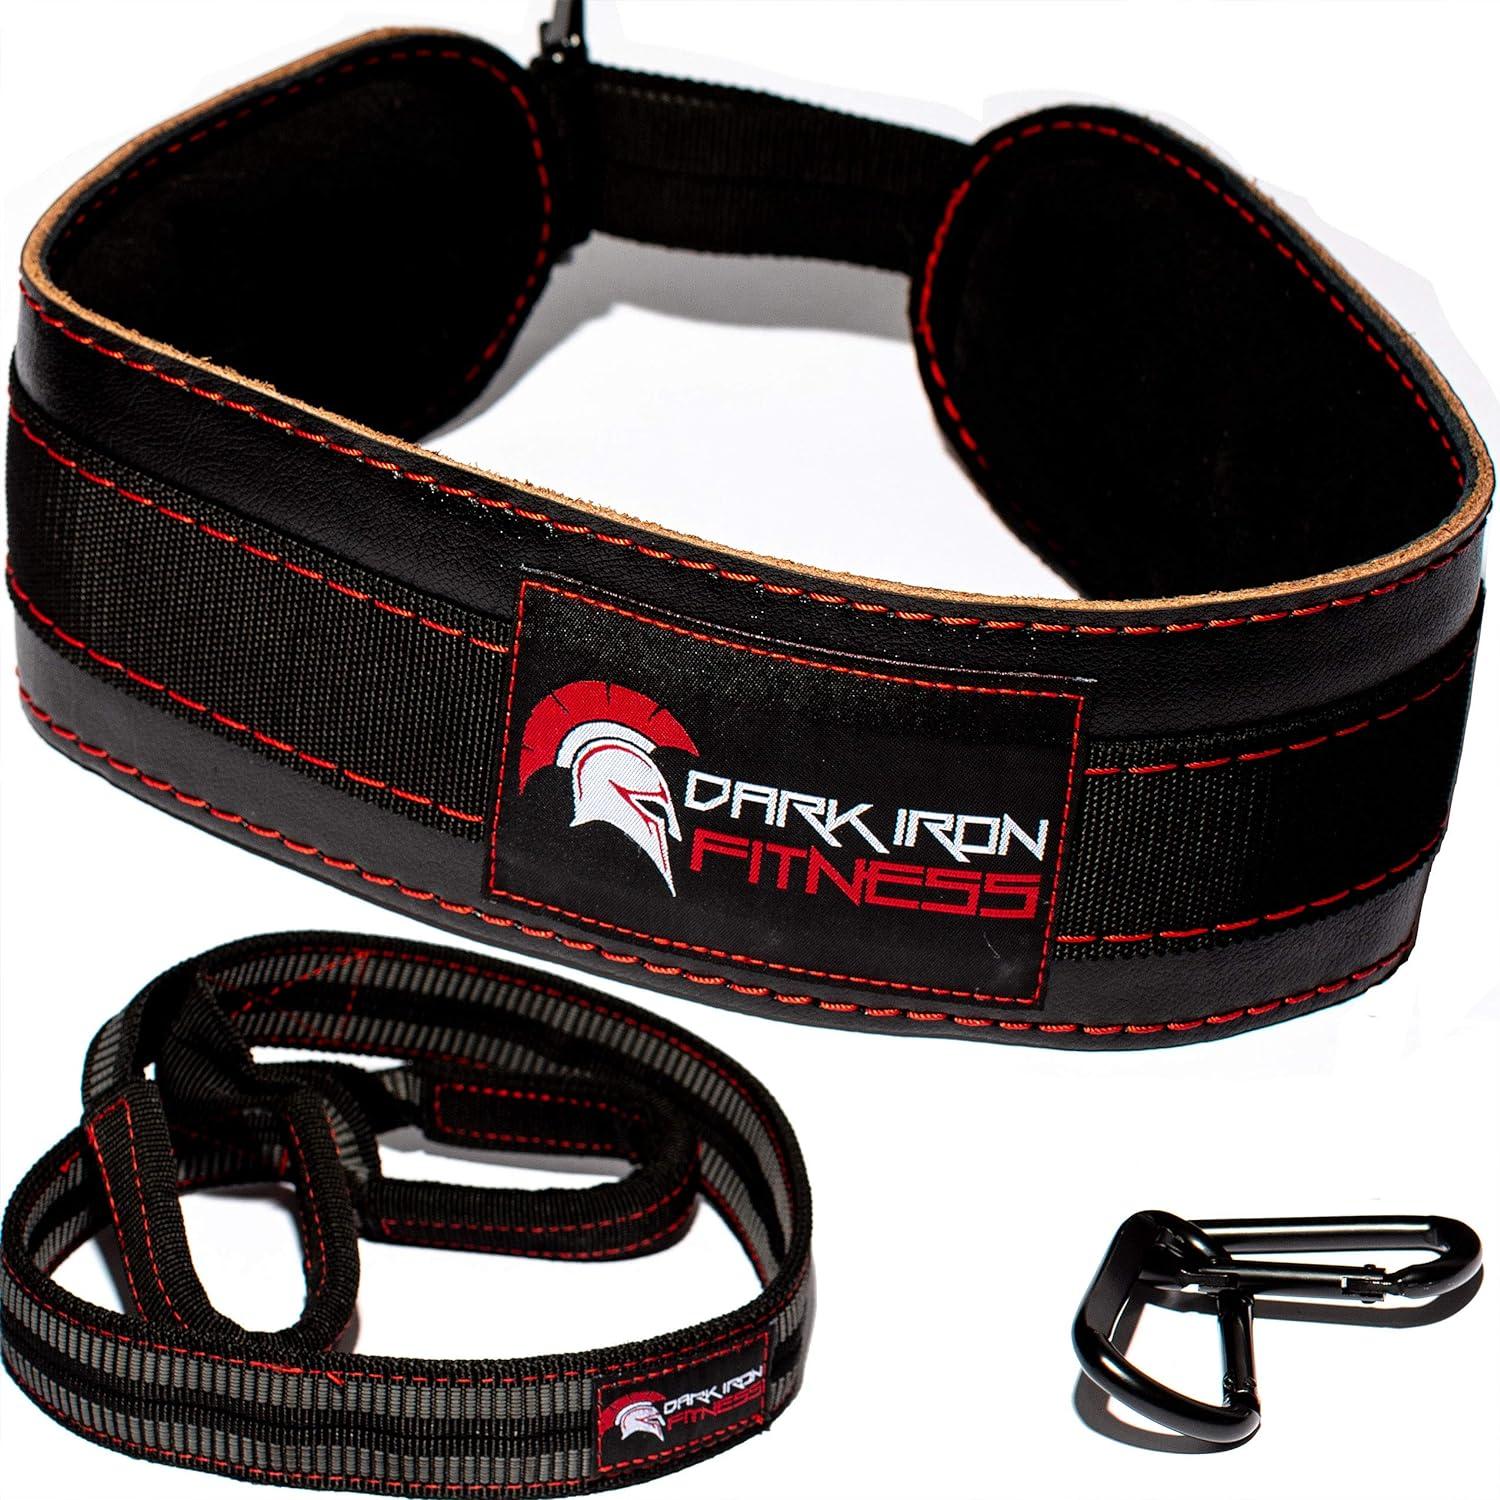 Dark Iron Fitness Leather Dip Belt for $9.99